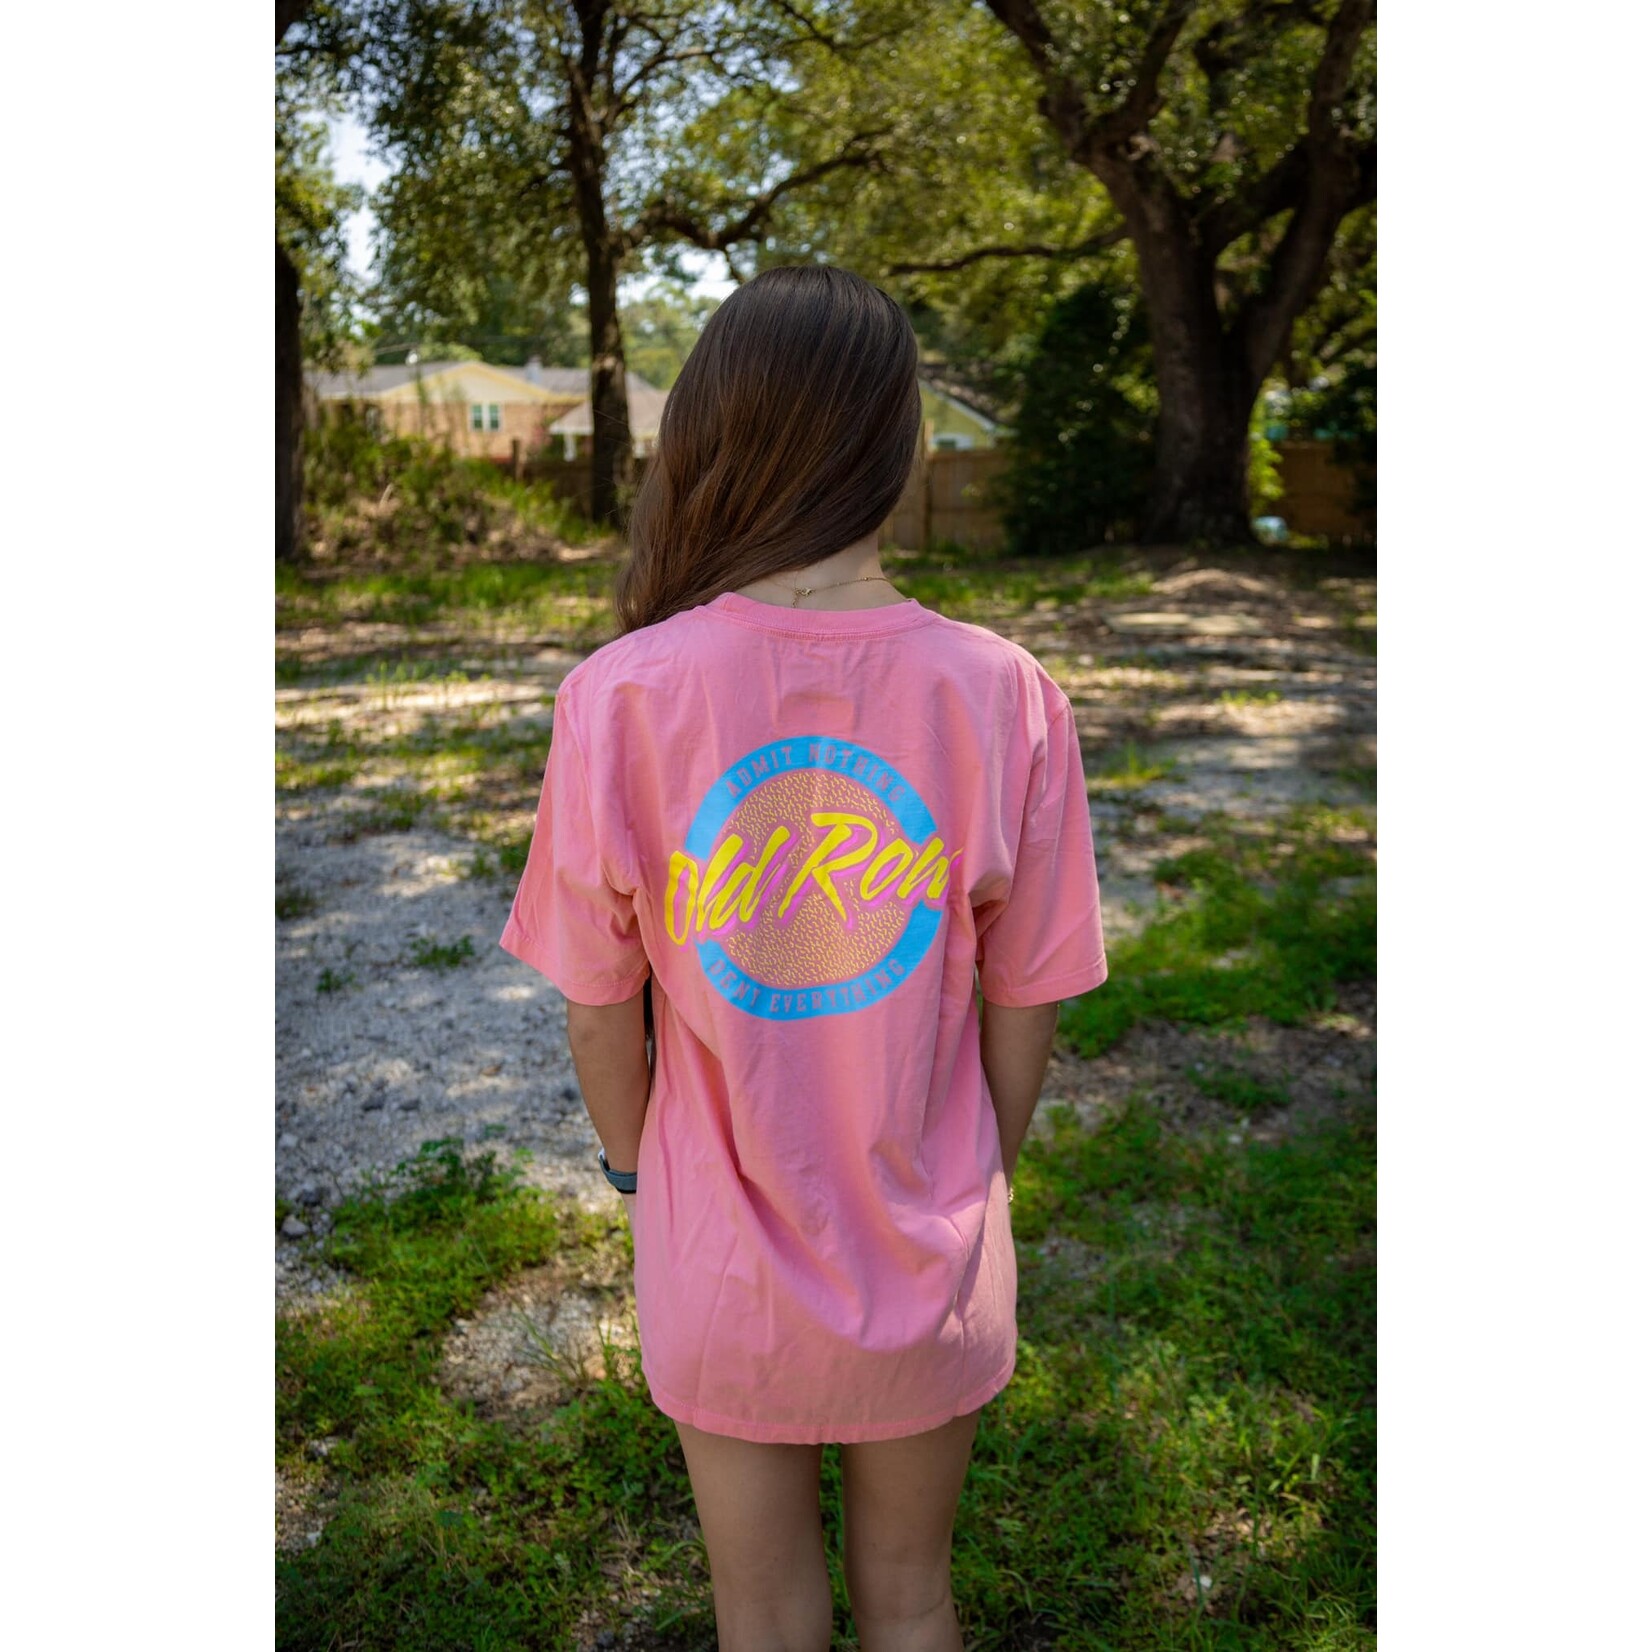 OLD ROW Old Row Outdoors Women's Circle Logo Pink Pocket S/S TEE Shirt